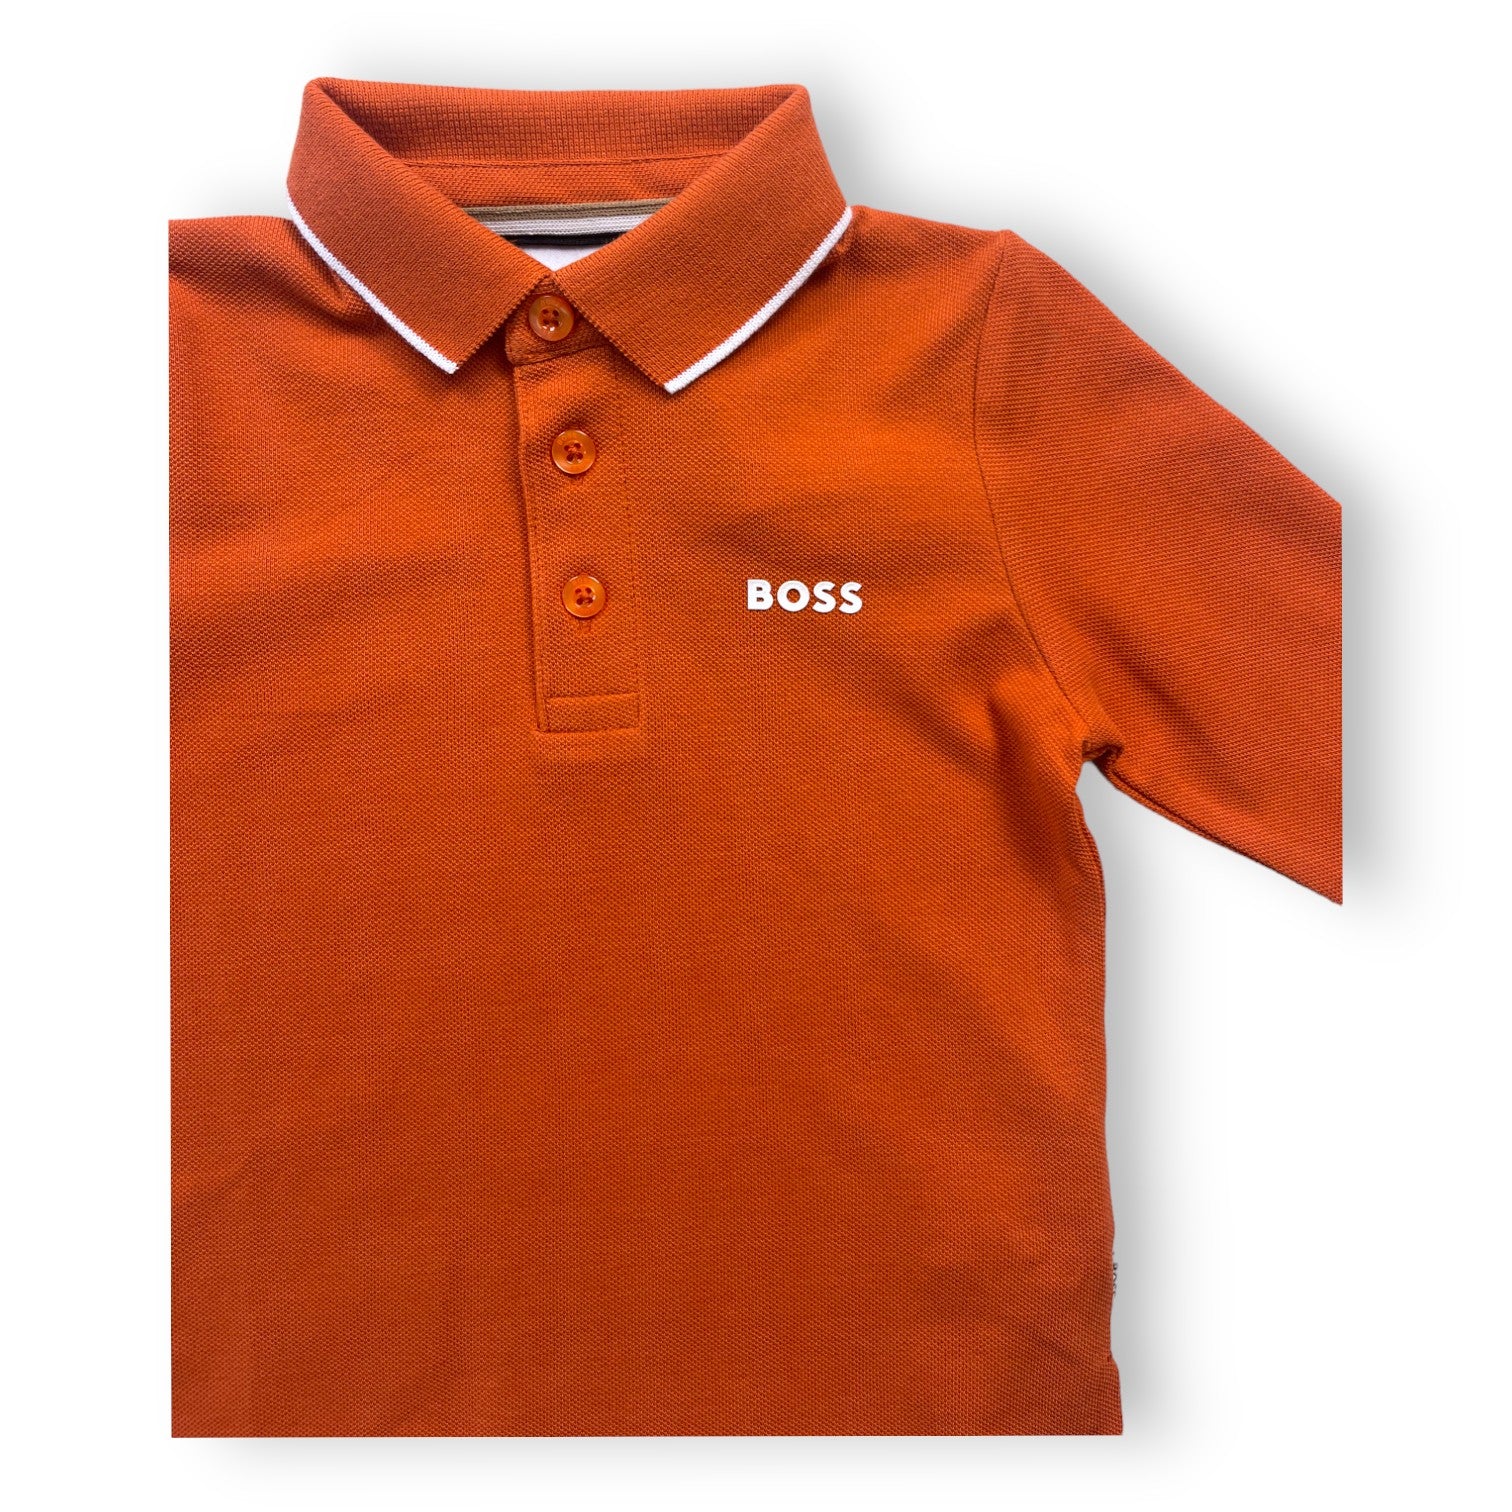 HUGO BOSS - Polo manches longues orange (neuf) - 12 mois